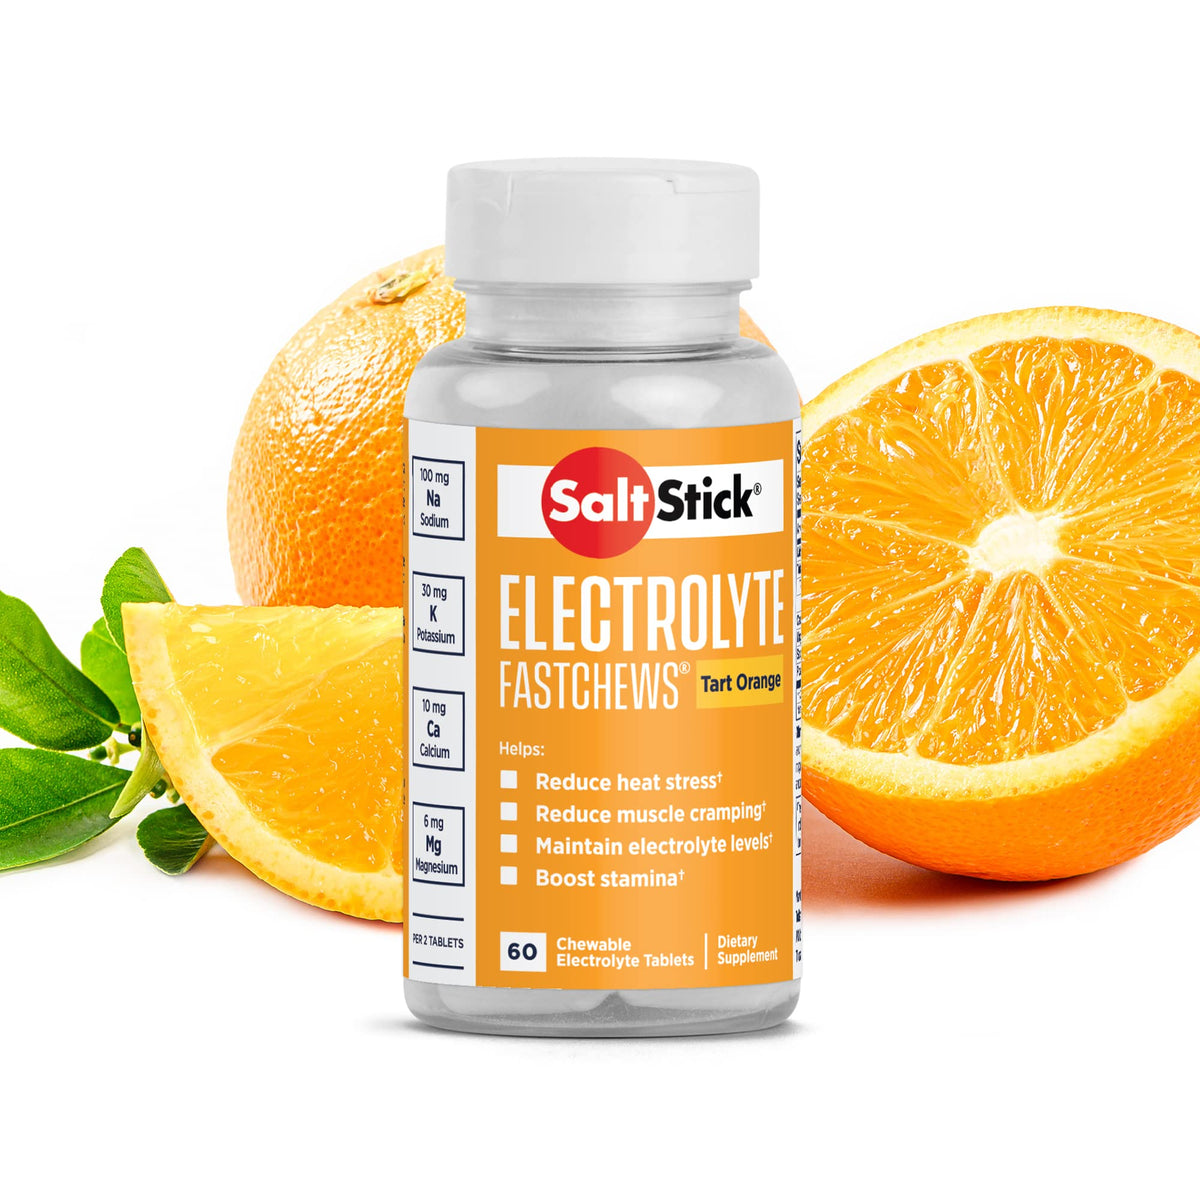 SaltStick Electrolyte Fastchews- Tart Orange, 60 Tablets